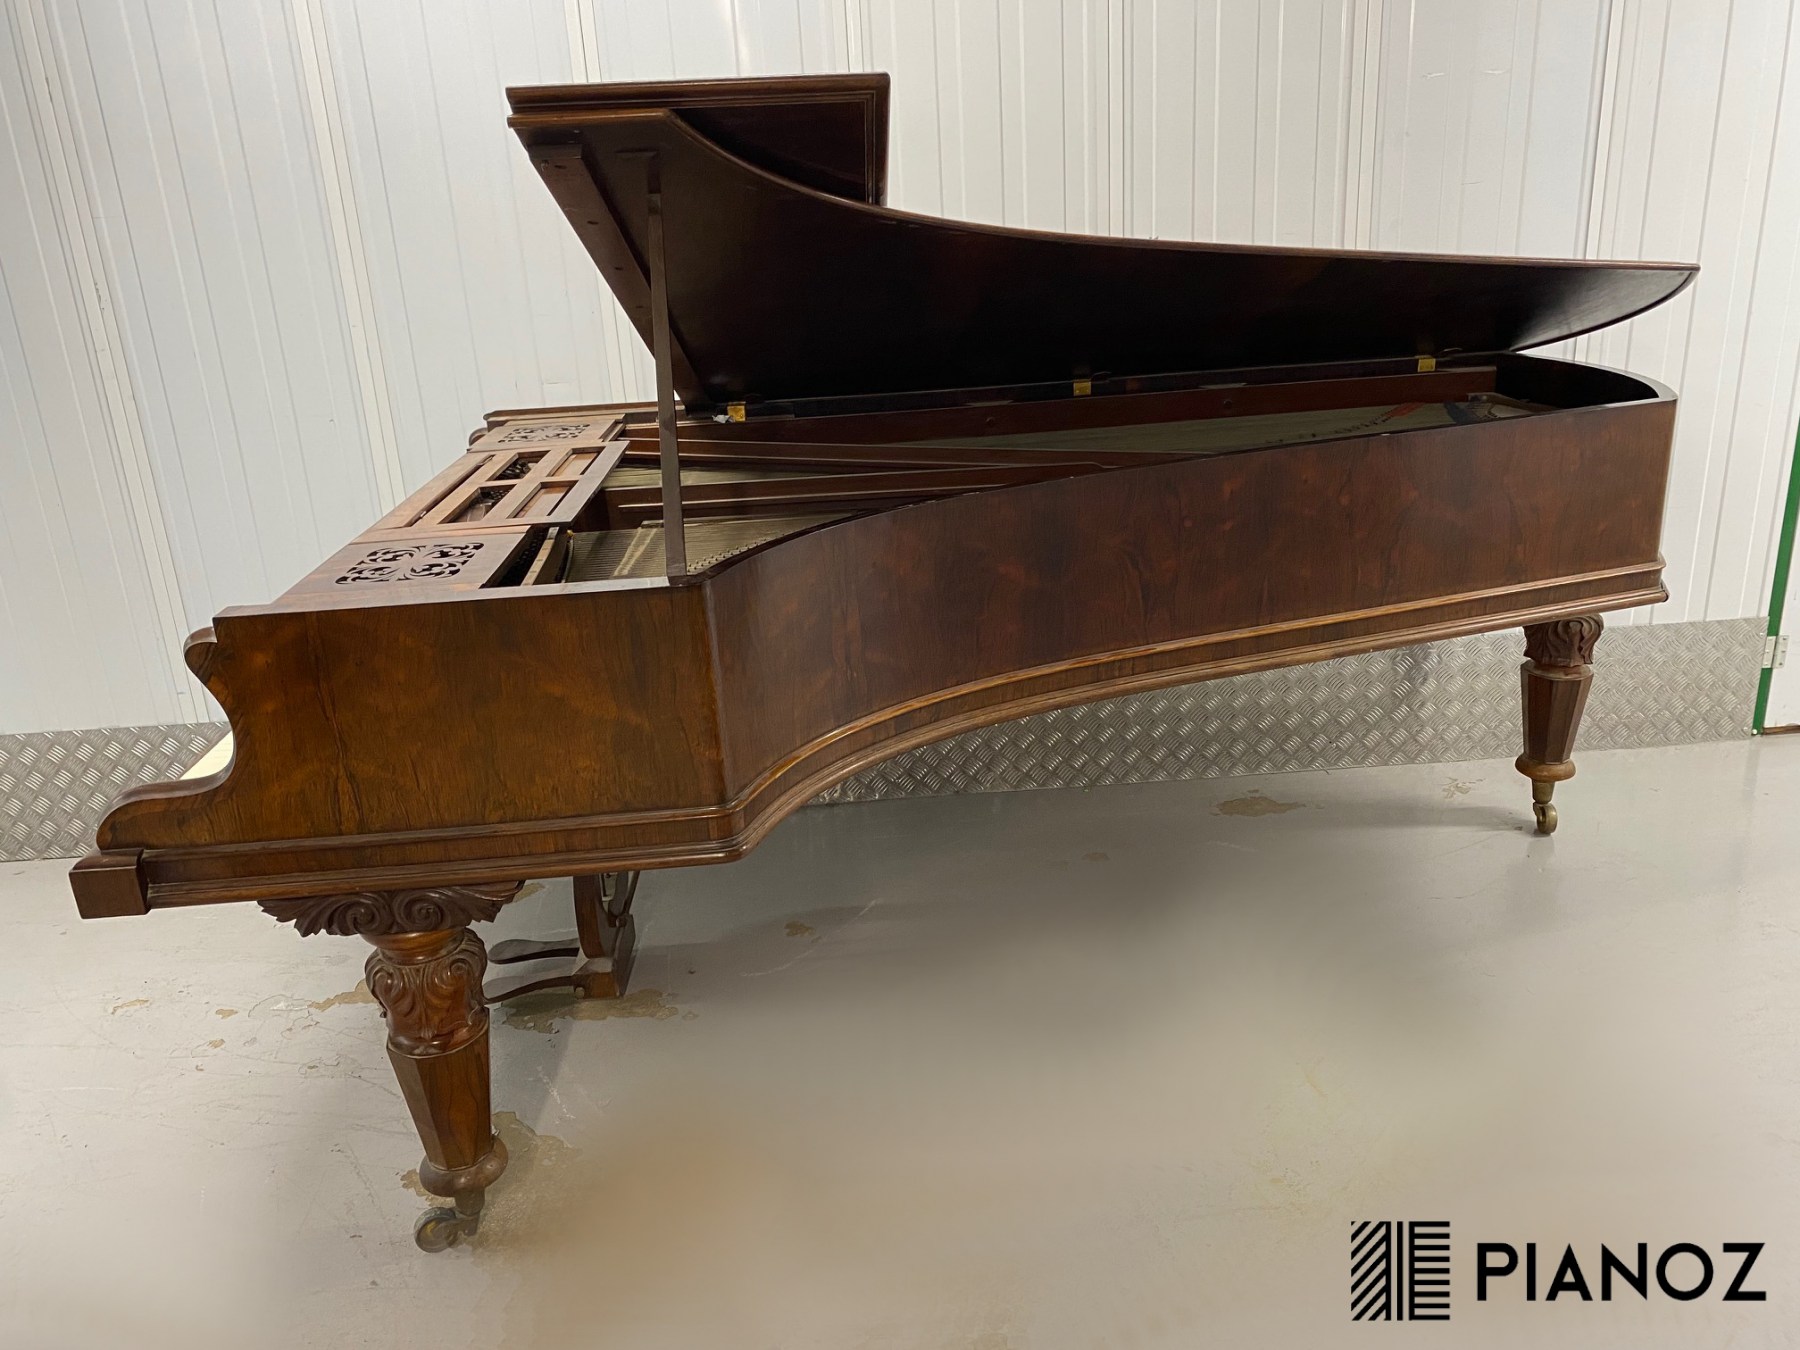 Broadwood Large Grand Piano piano for sale in UK